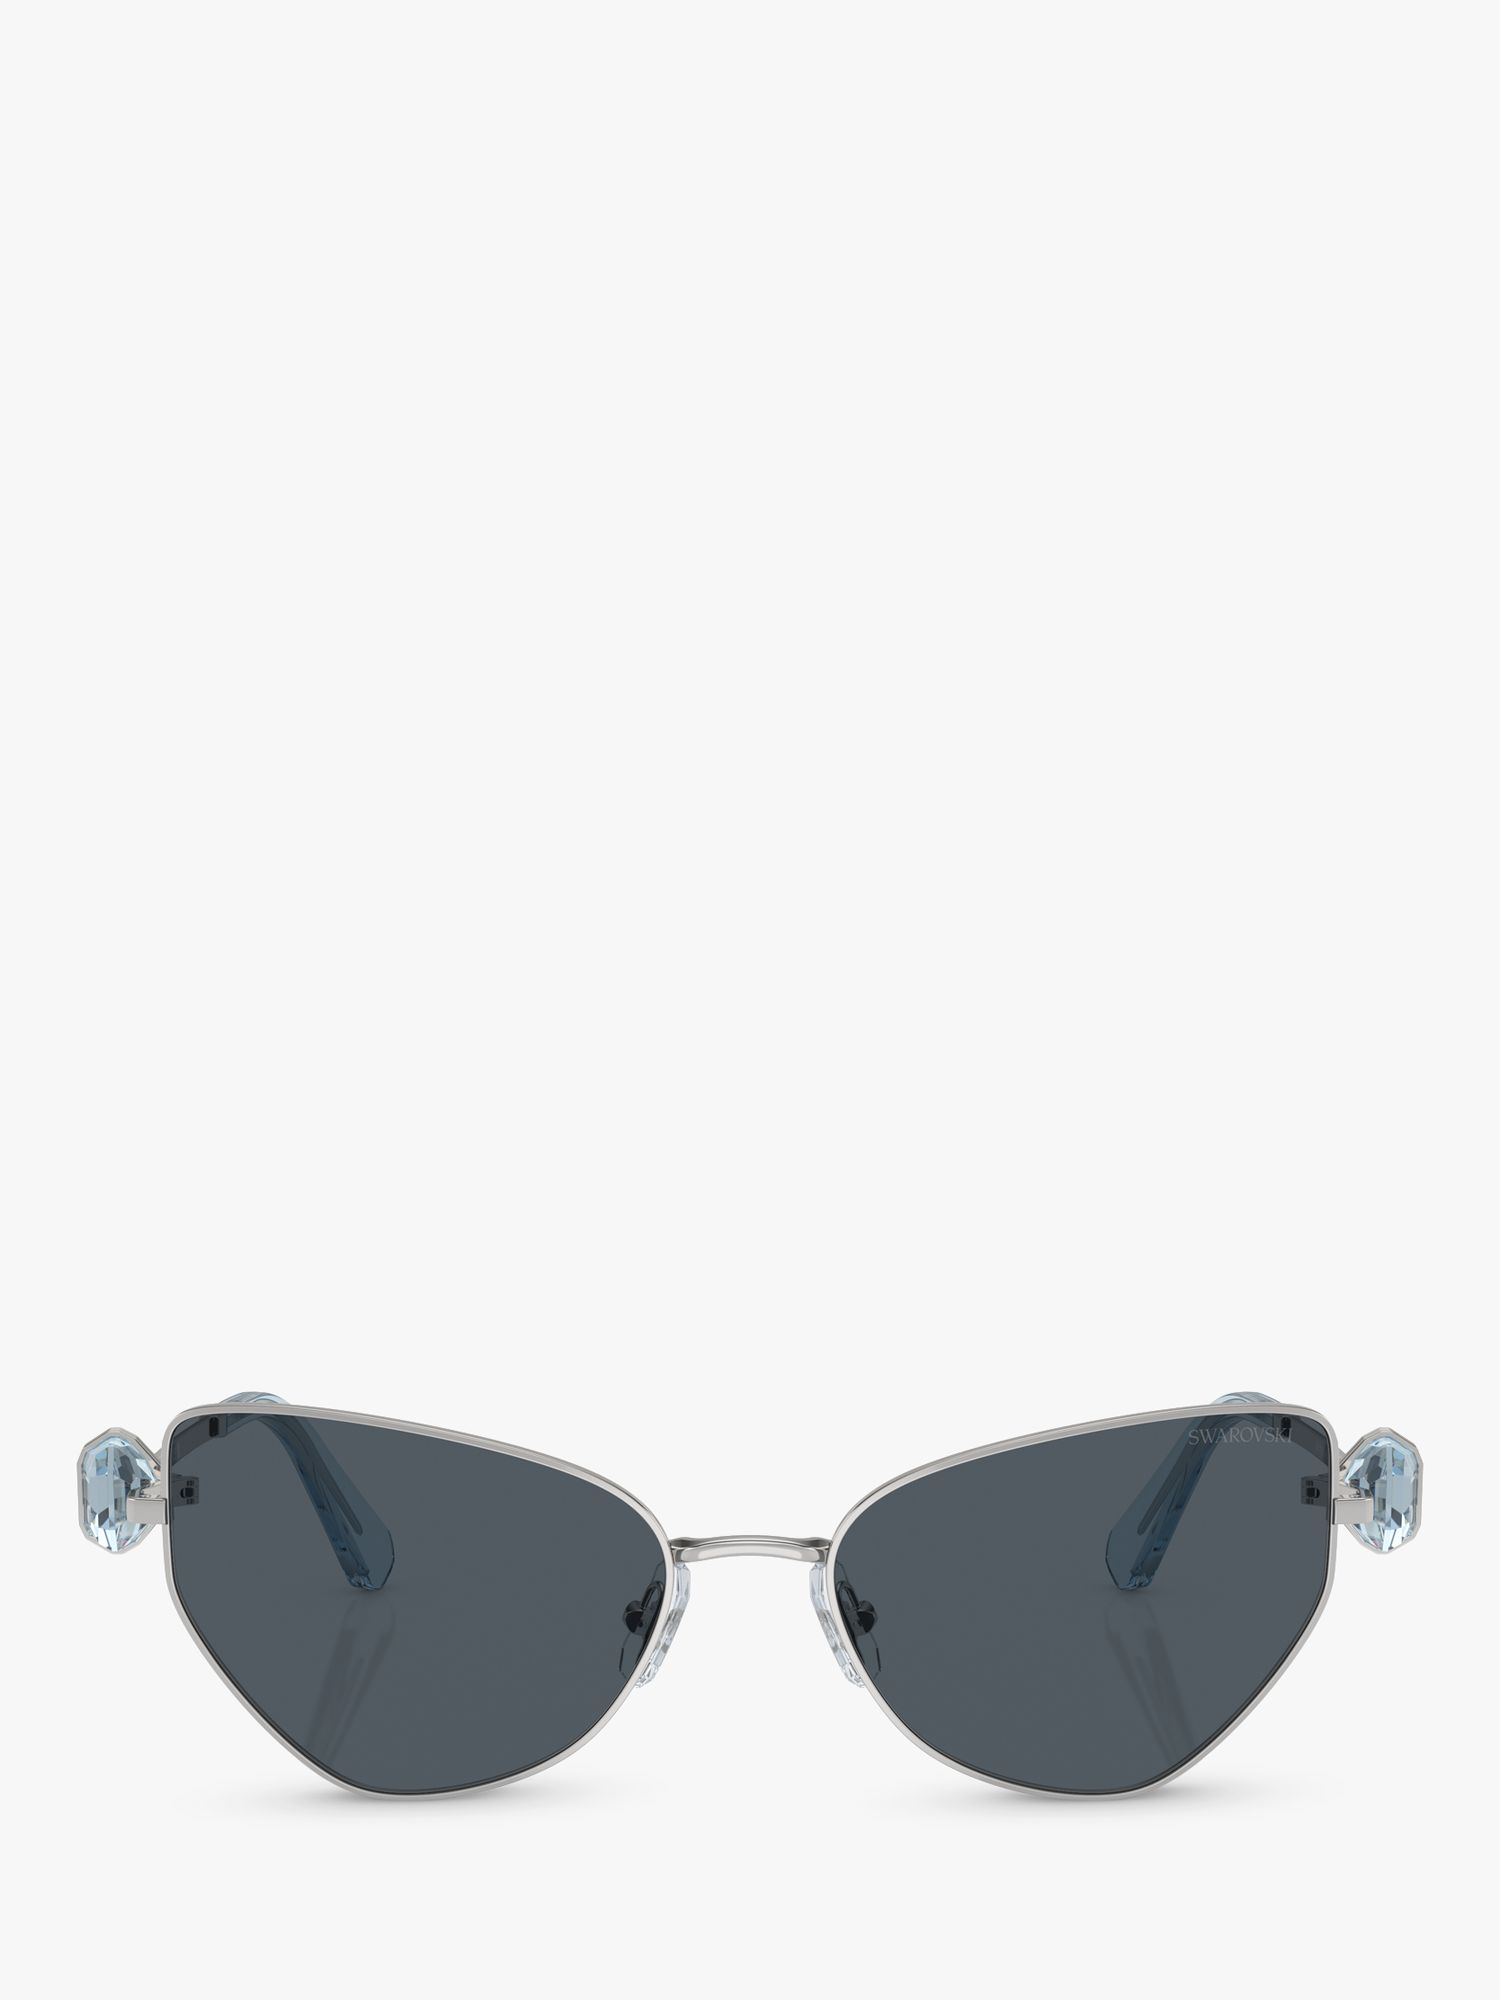 Buy Swarovski SK7003 Women's Irregular Sunglasses, Silver/Grey Online at johnlewis.com